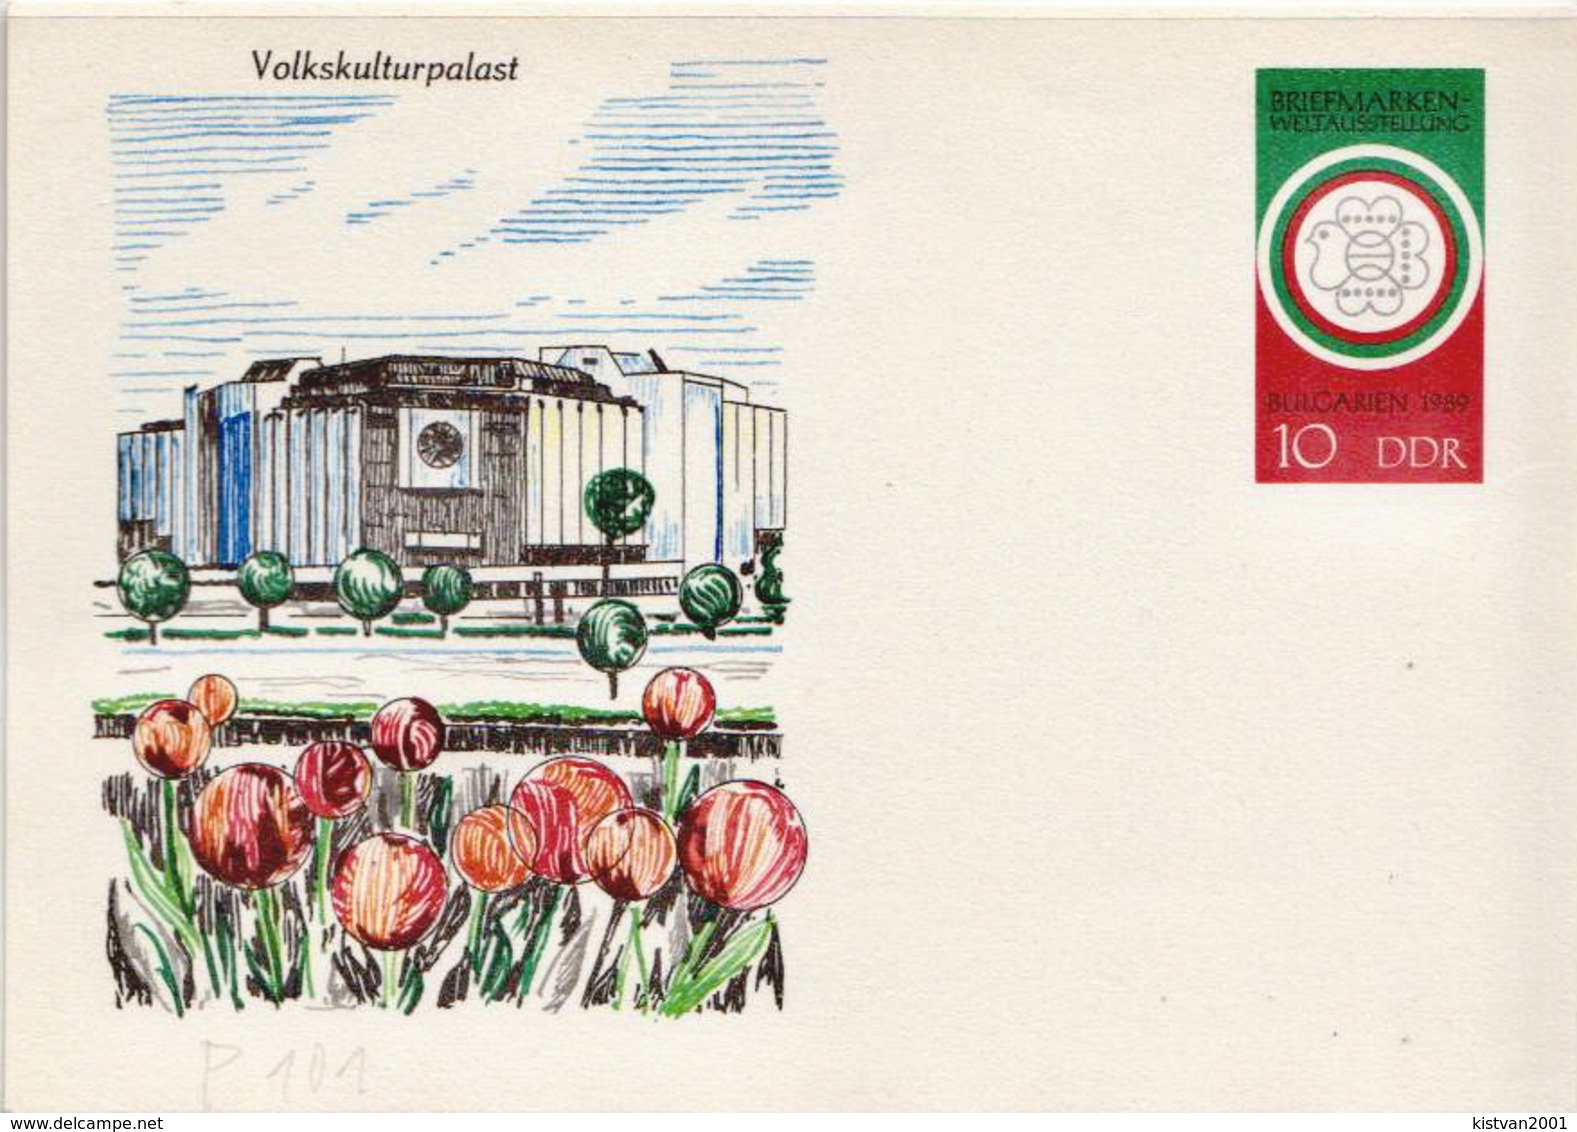 Germany / DDR Postal Stationery Card - Postcards - Mint